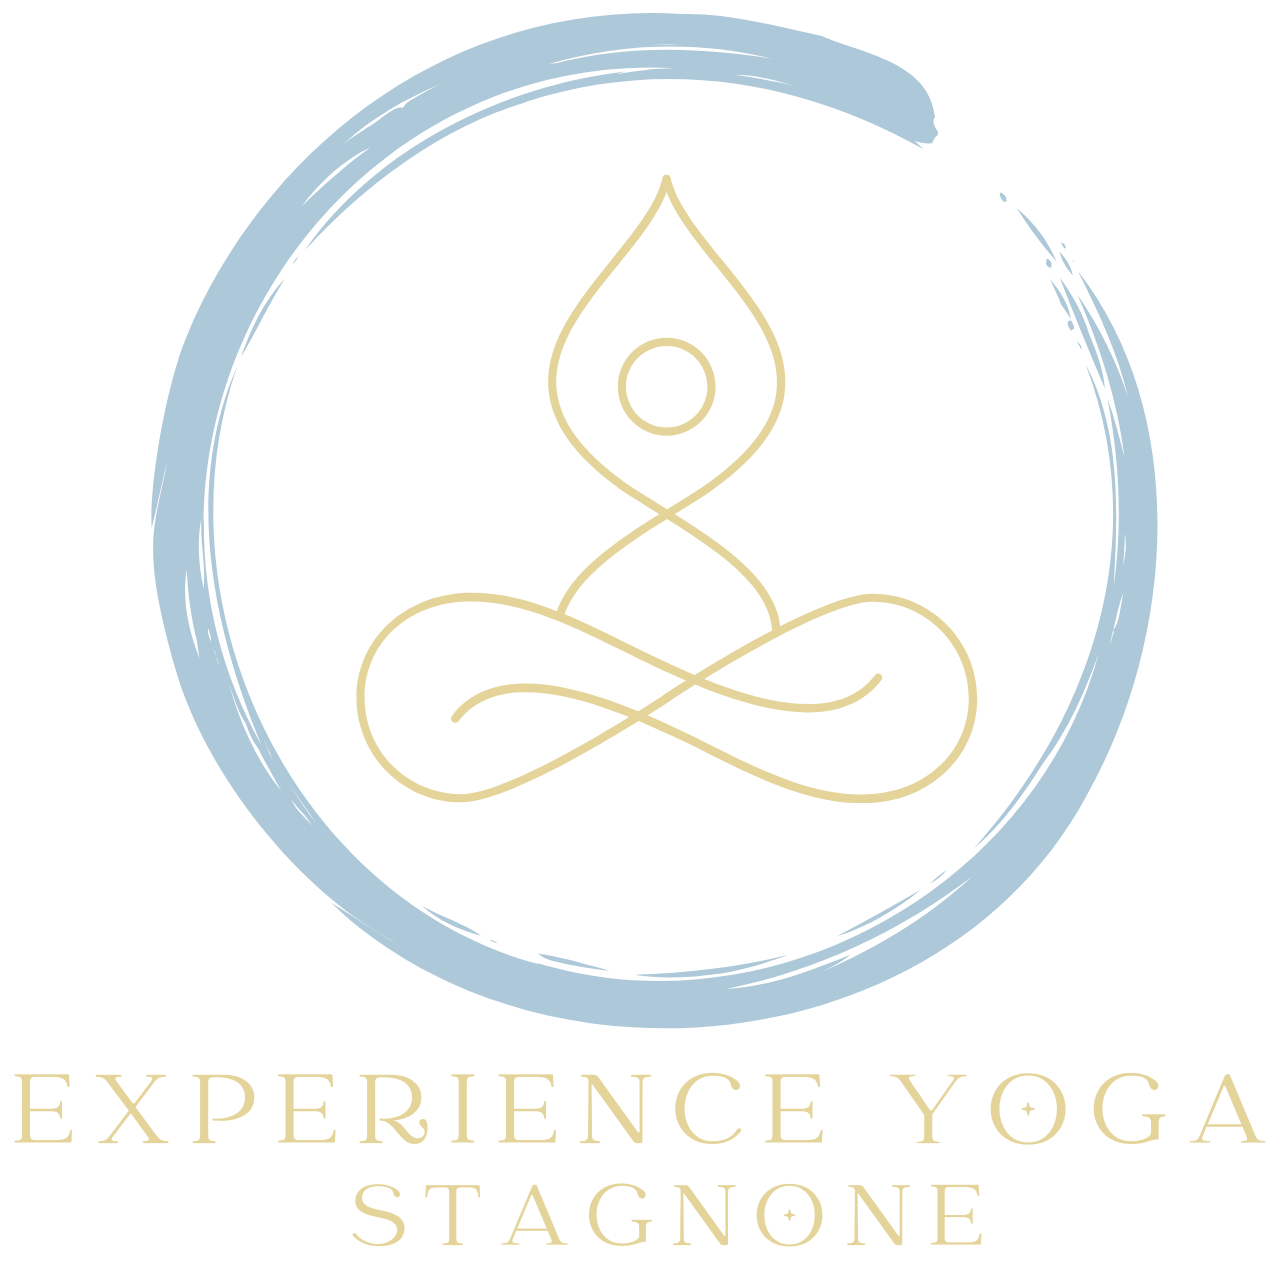 Experience Yoga Stagnone